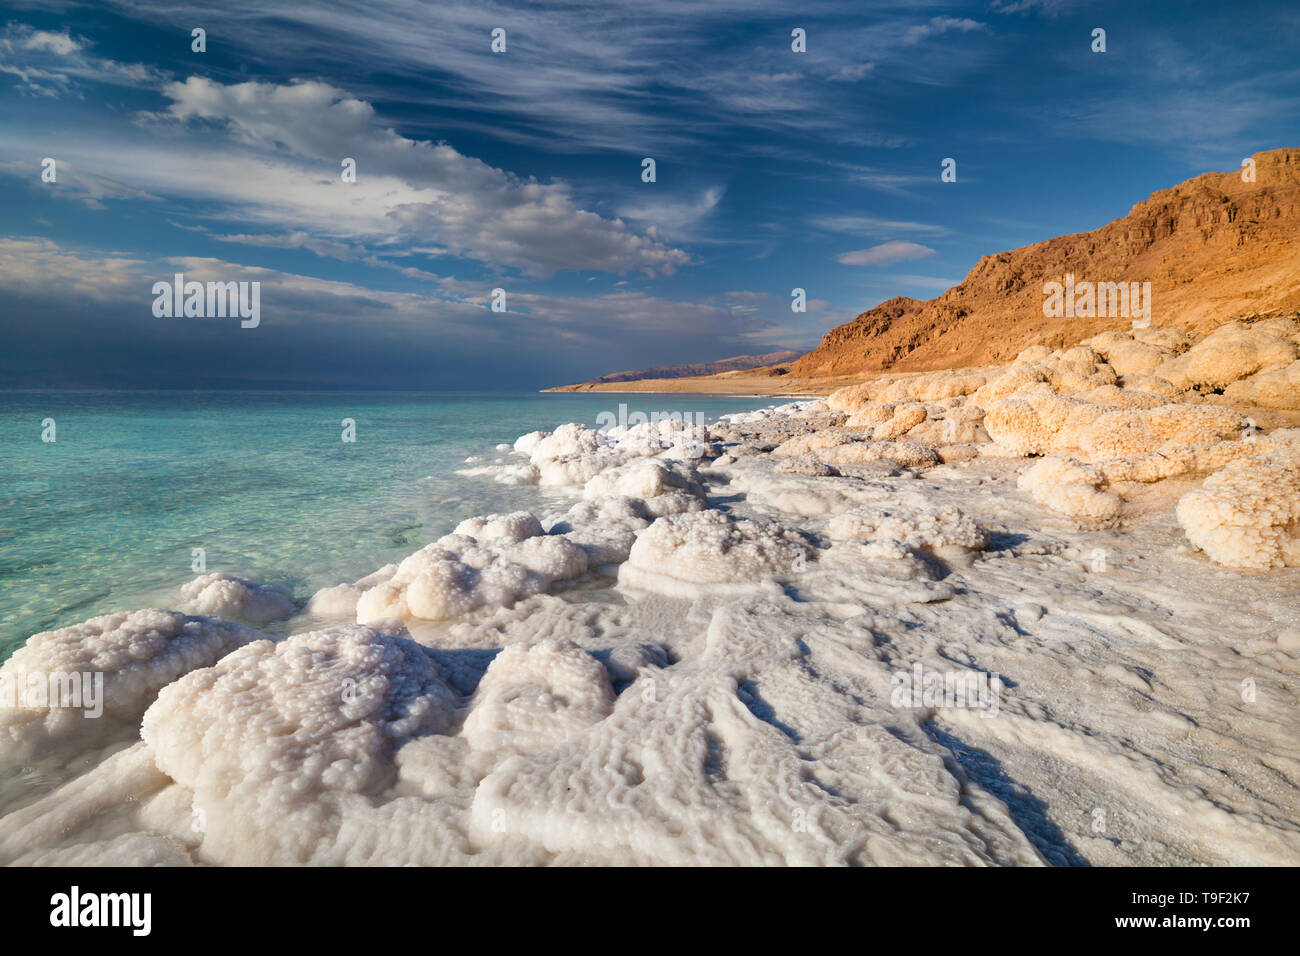 View of the Dead Sea coastline on a sunny day Stock Photo